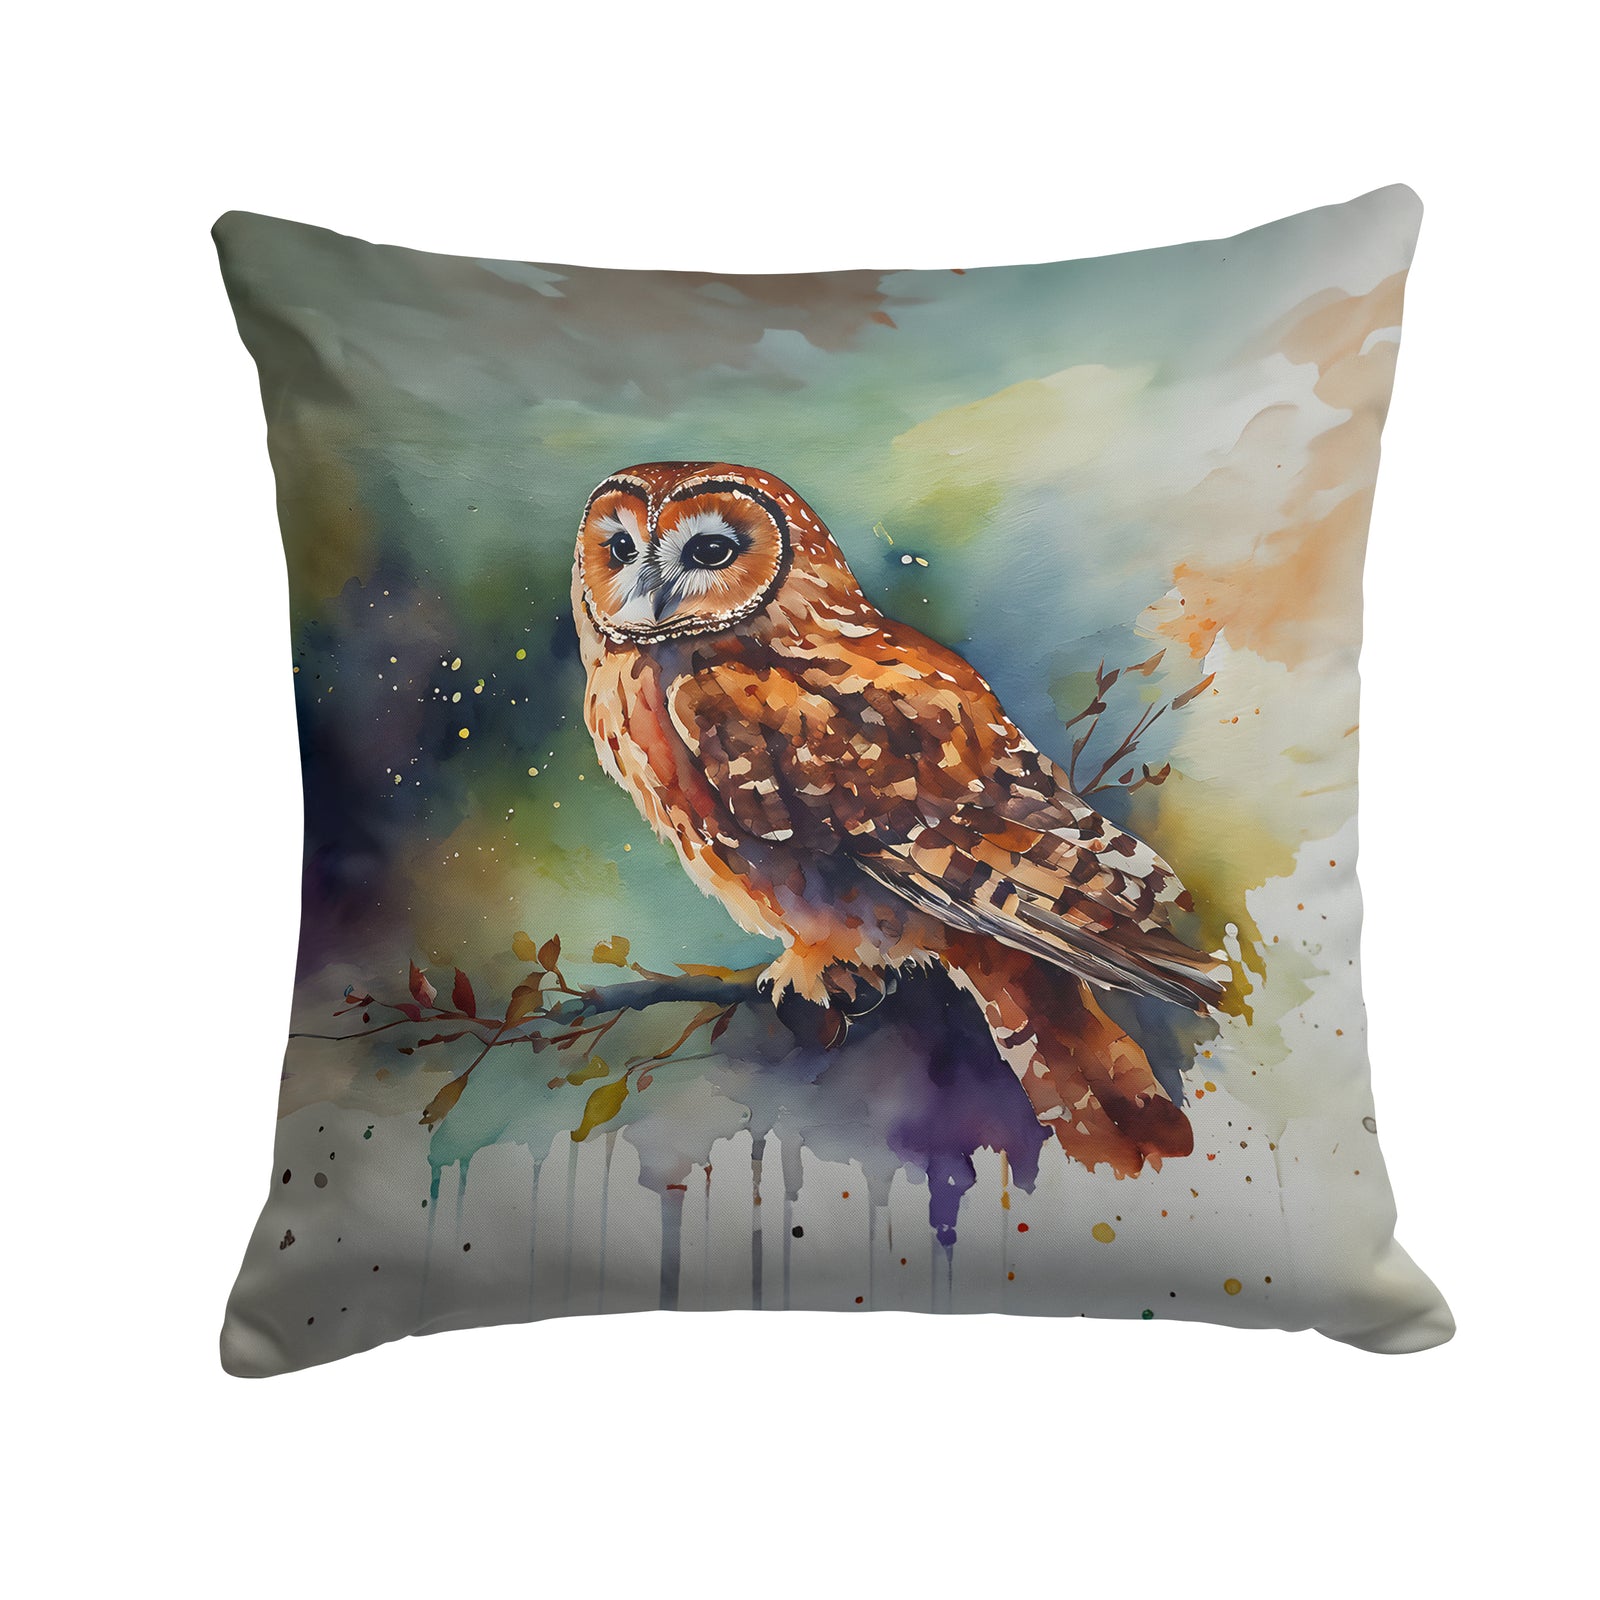 Buy this Tawny Owl Throw Pillow